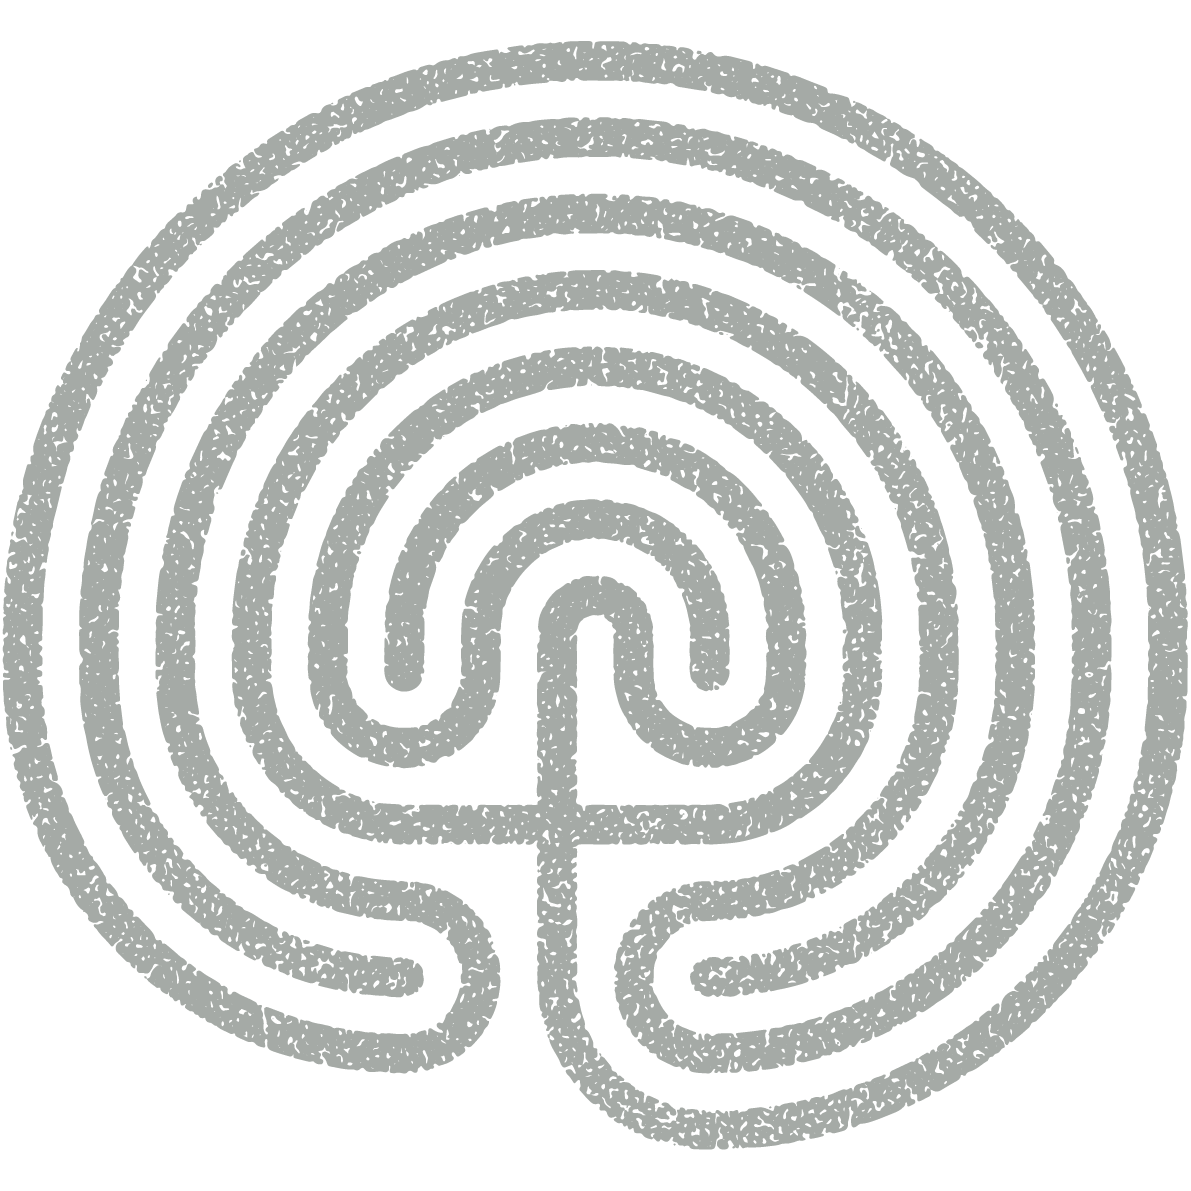 Labyrinth graphic logo